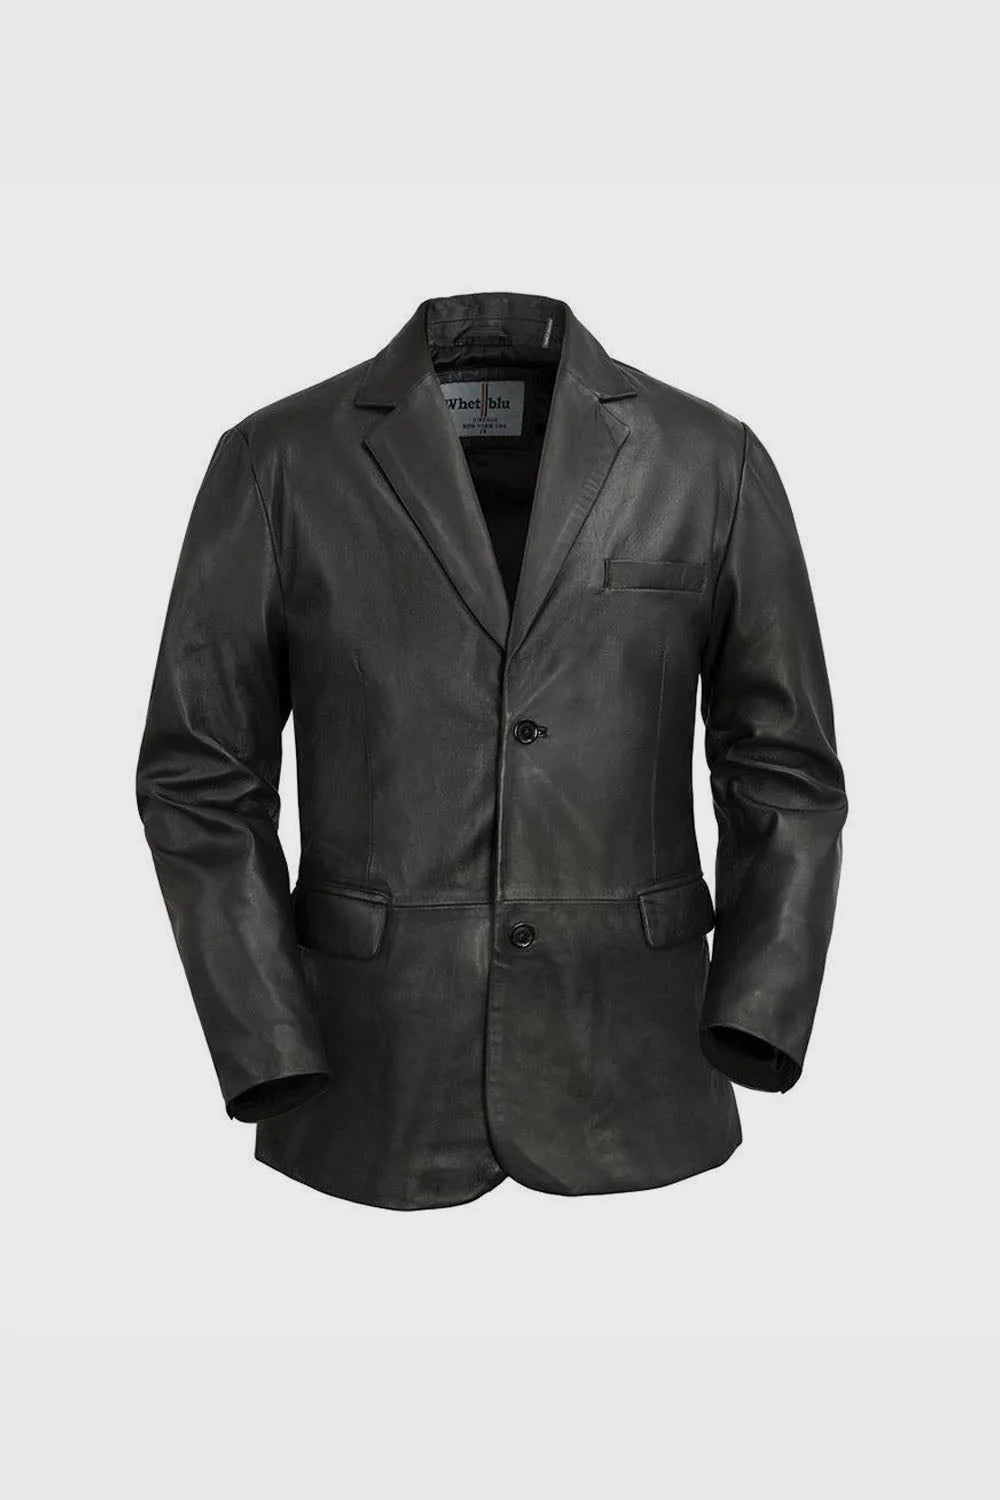 Esquire - Extreme Biker LeatherMen's Motorcycle Premium Leather Fashion Jacket Clothing Outerwear Style Apparel